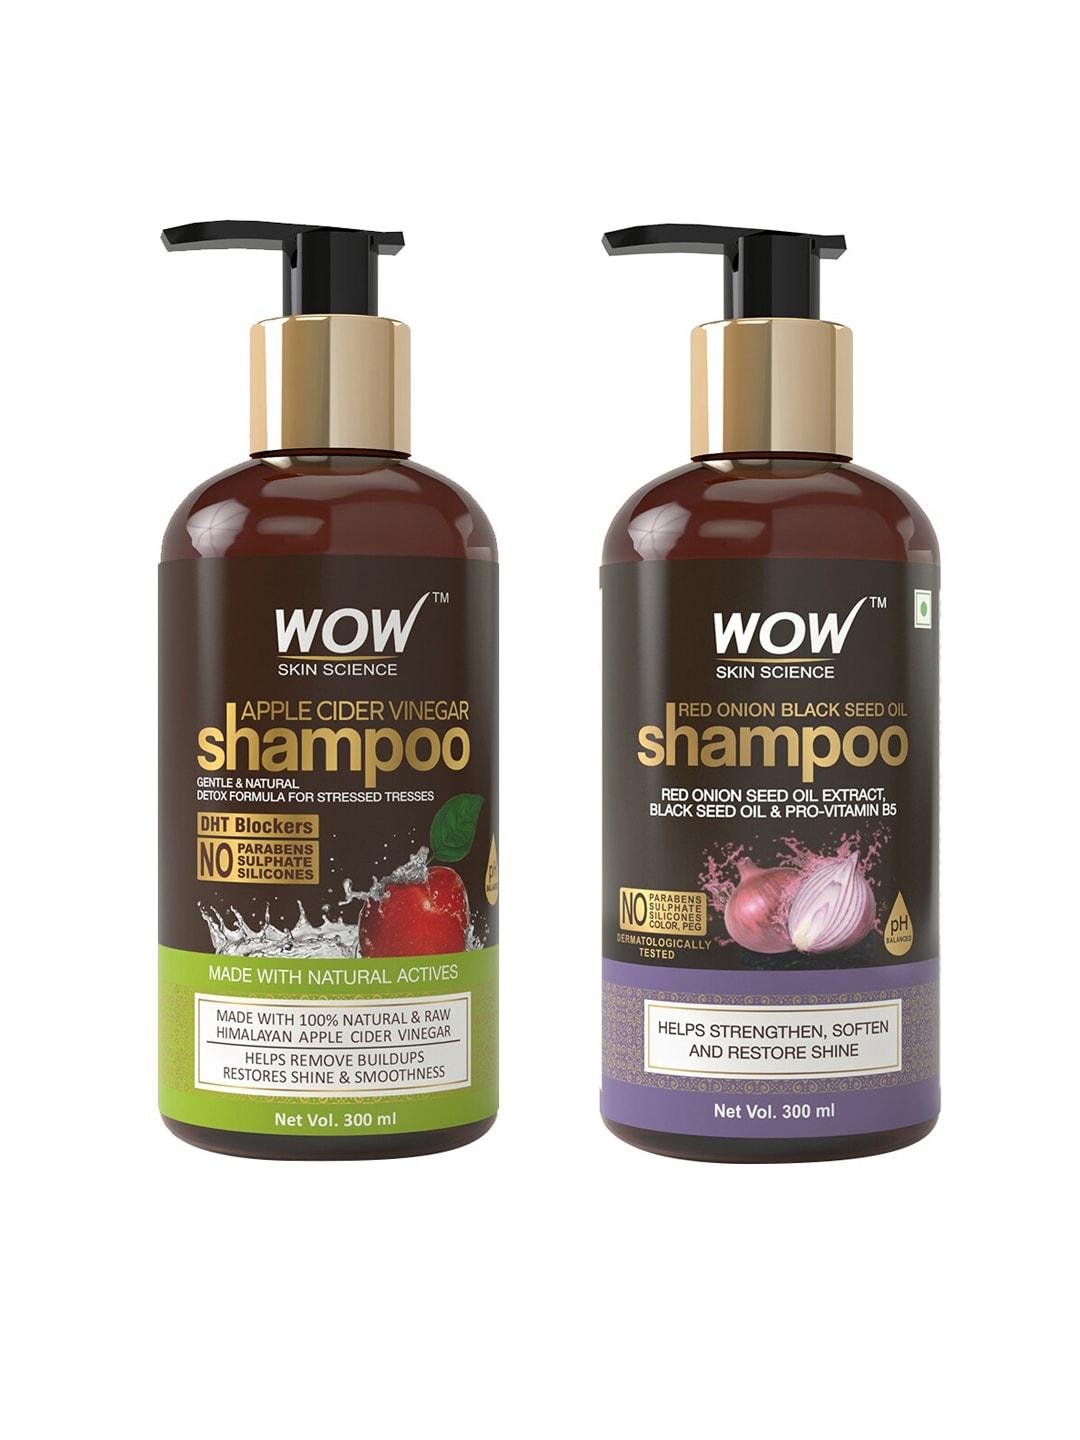 WOW SKIN SCIENCE Set of Onion Black Seed Oil Shampoo & Apple Cider Vinegar Shampoo